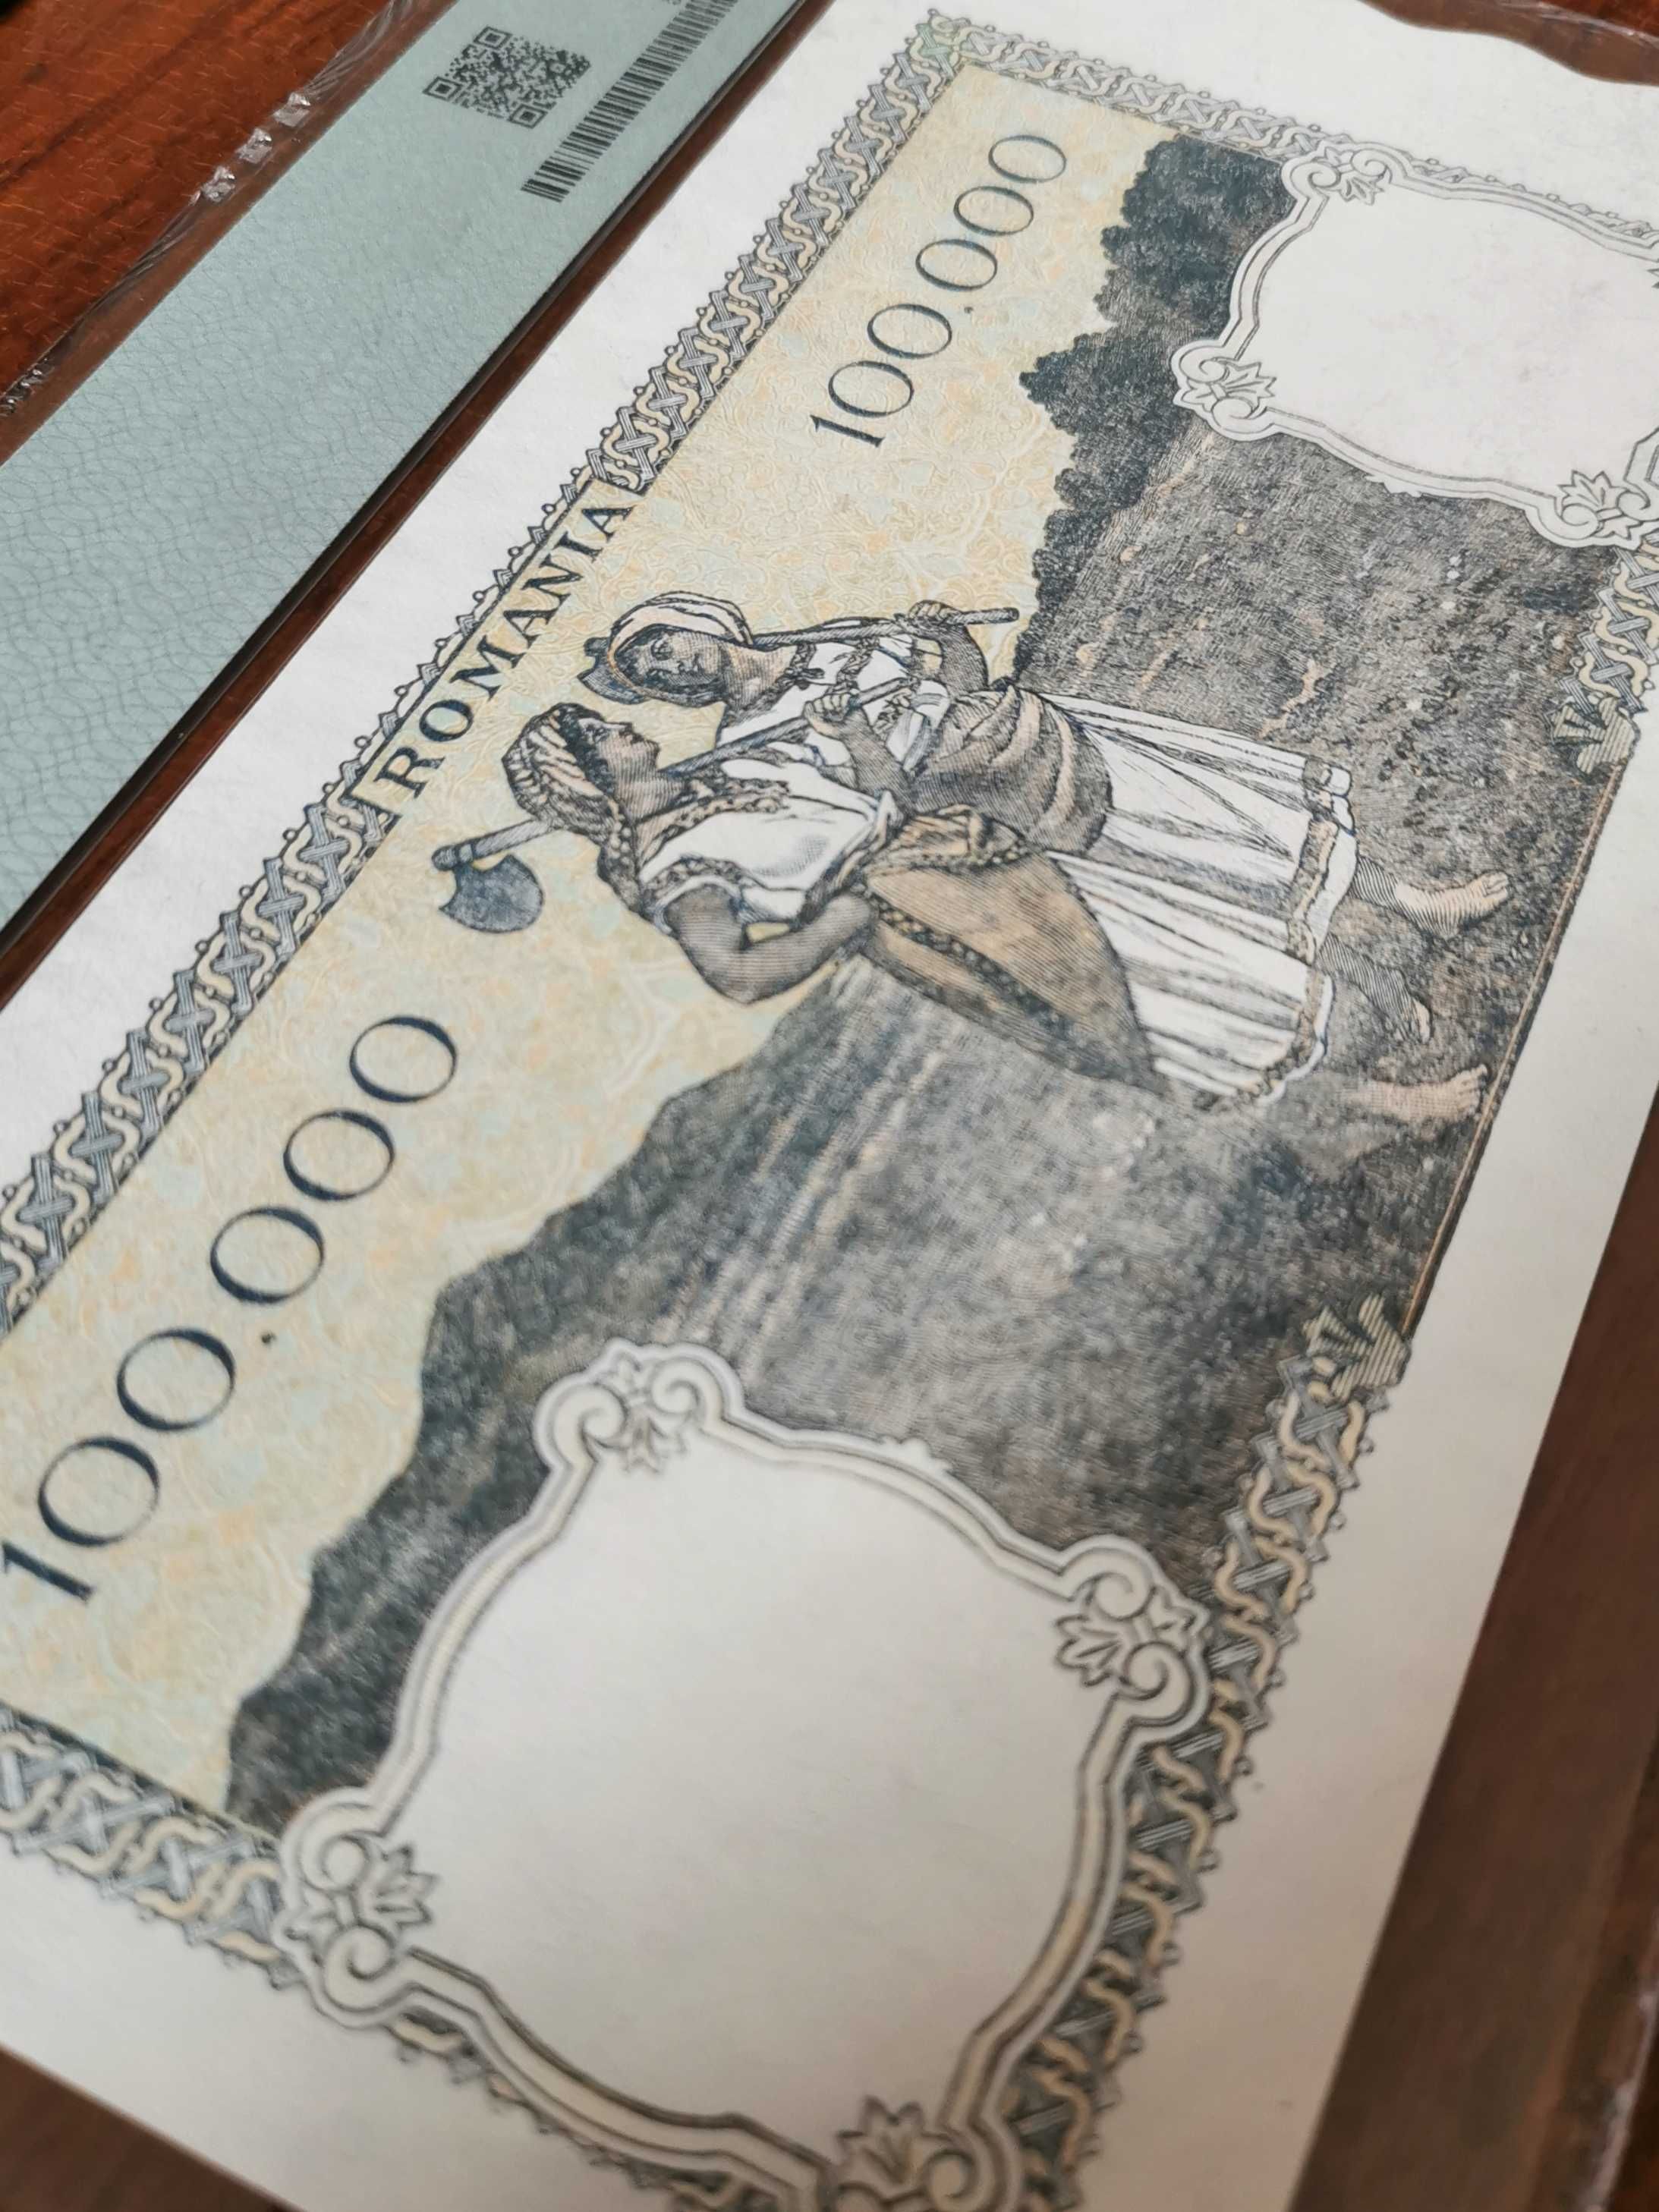 Bancnota 100.000 lei 1946, grad PMG 58